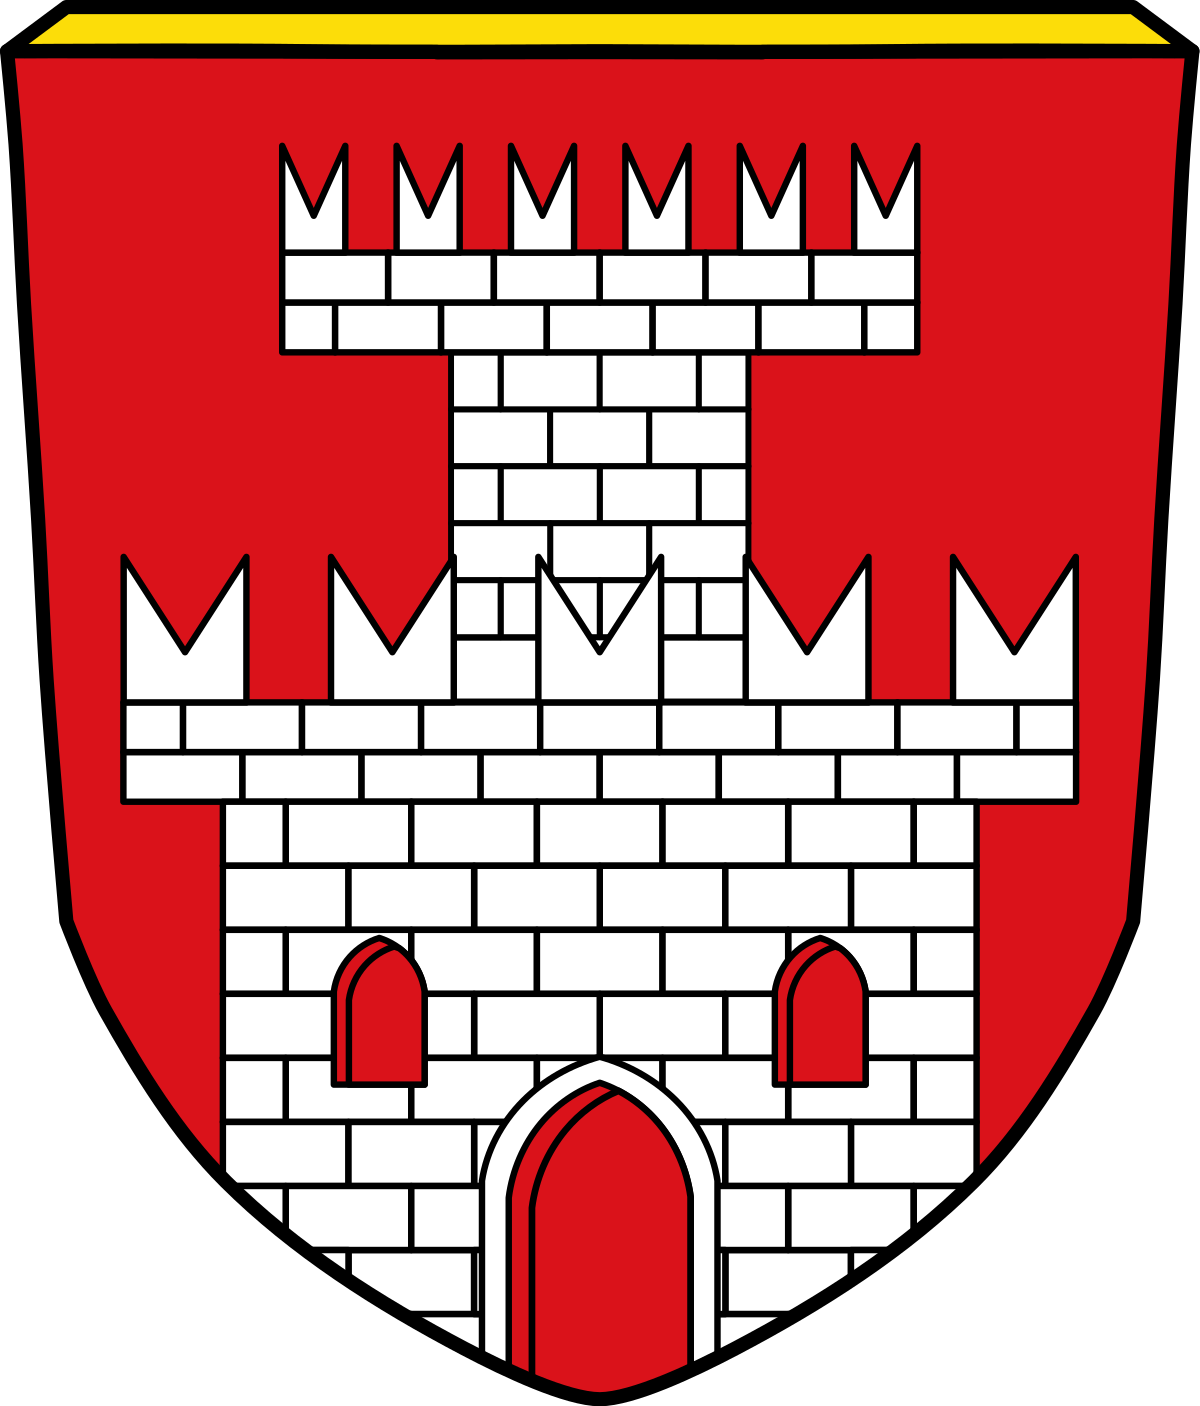 Laufen (Salzach) – Wikipedia